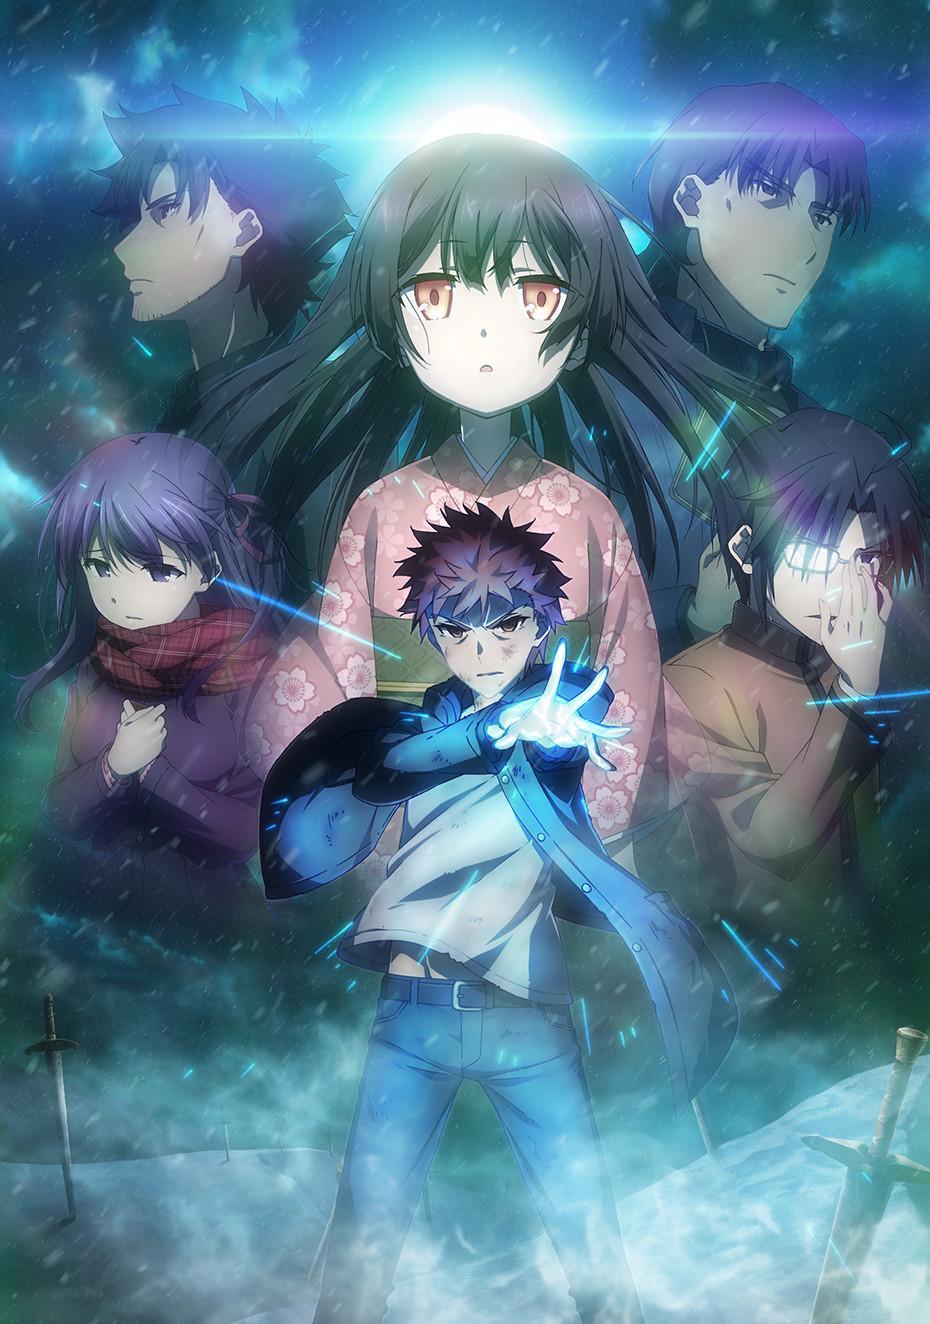 Fate/Kaleid Liner Prisma Illya: Sekka no Chikai prequel film